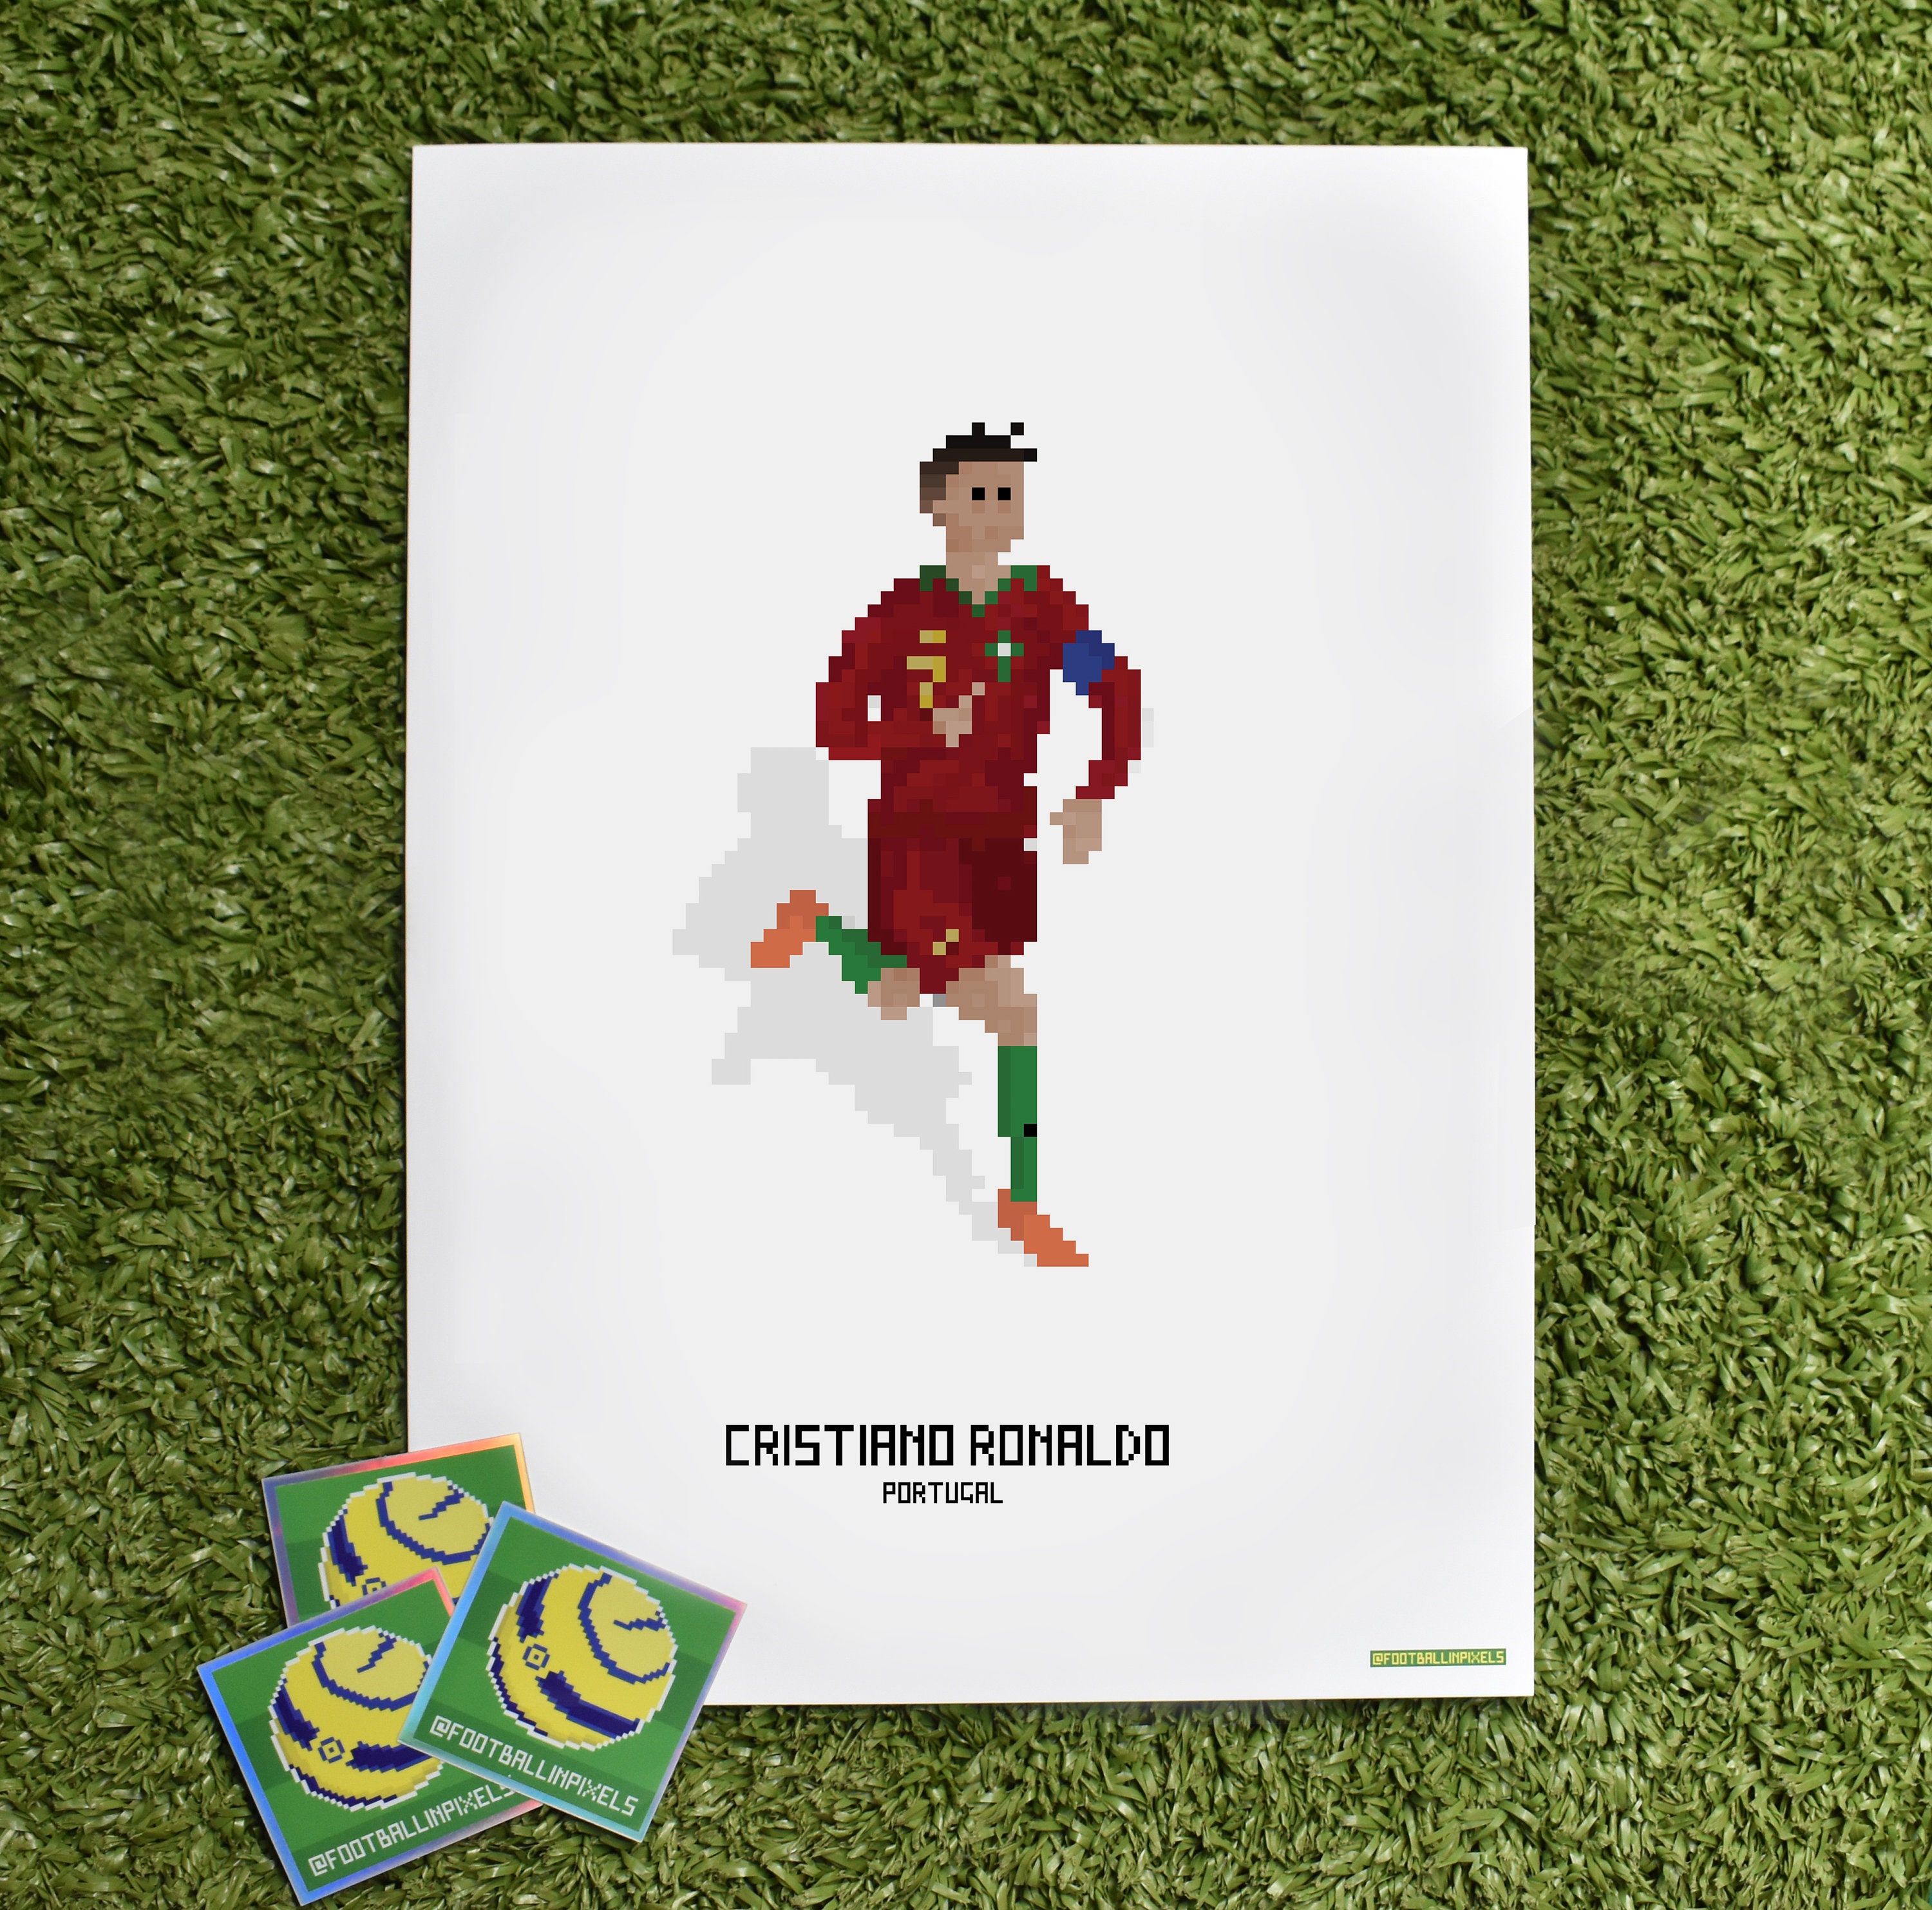 Soccer Style Guide: Dress like Ronaldo - Sports Illustrated